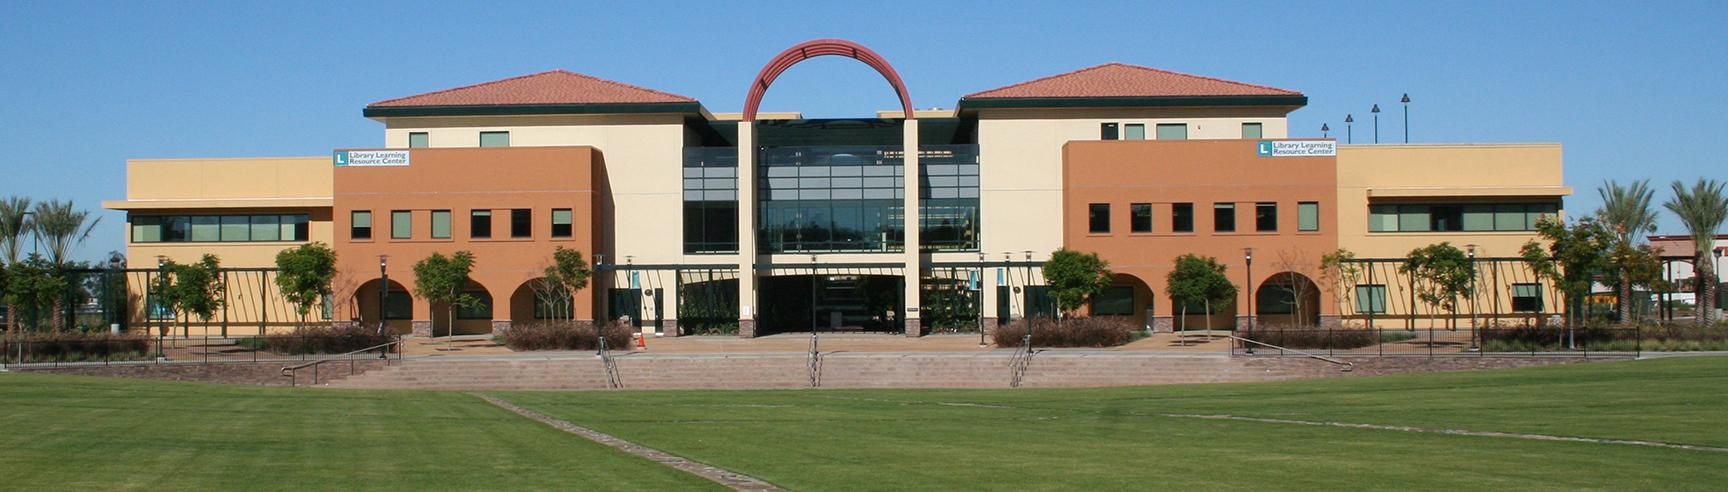 San Diego Miramar College LLRC Building